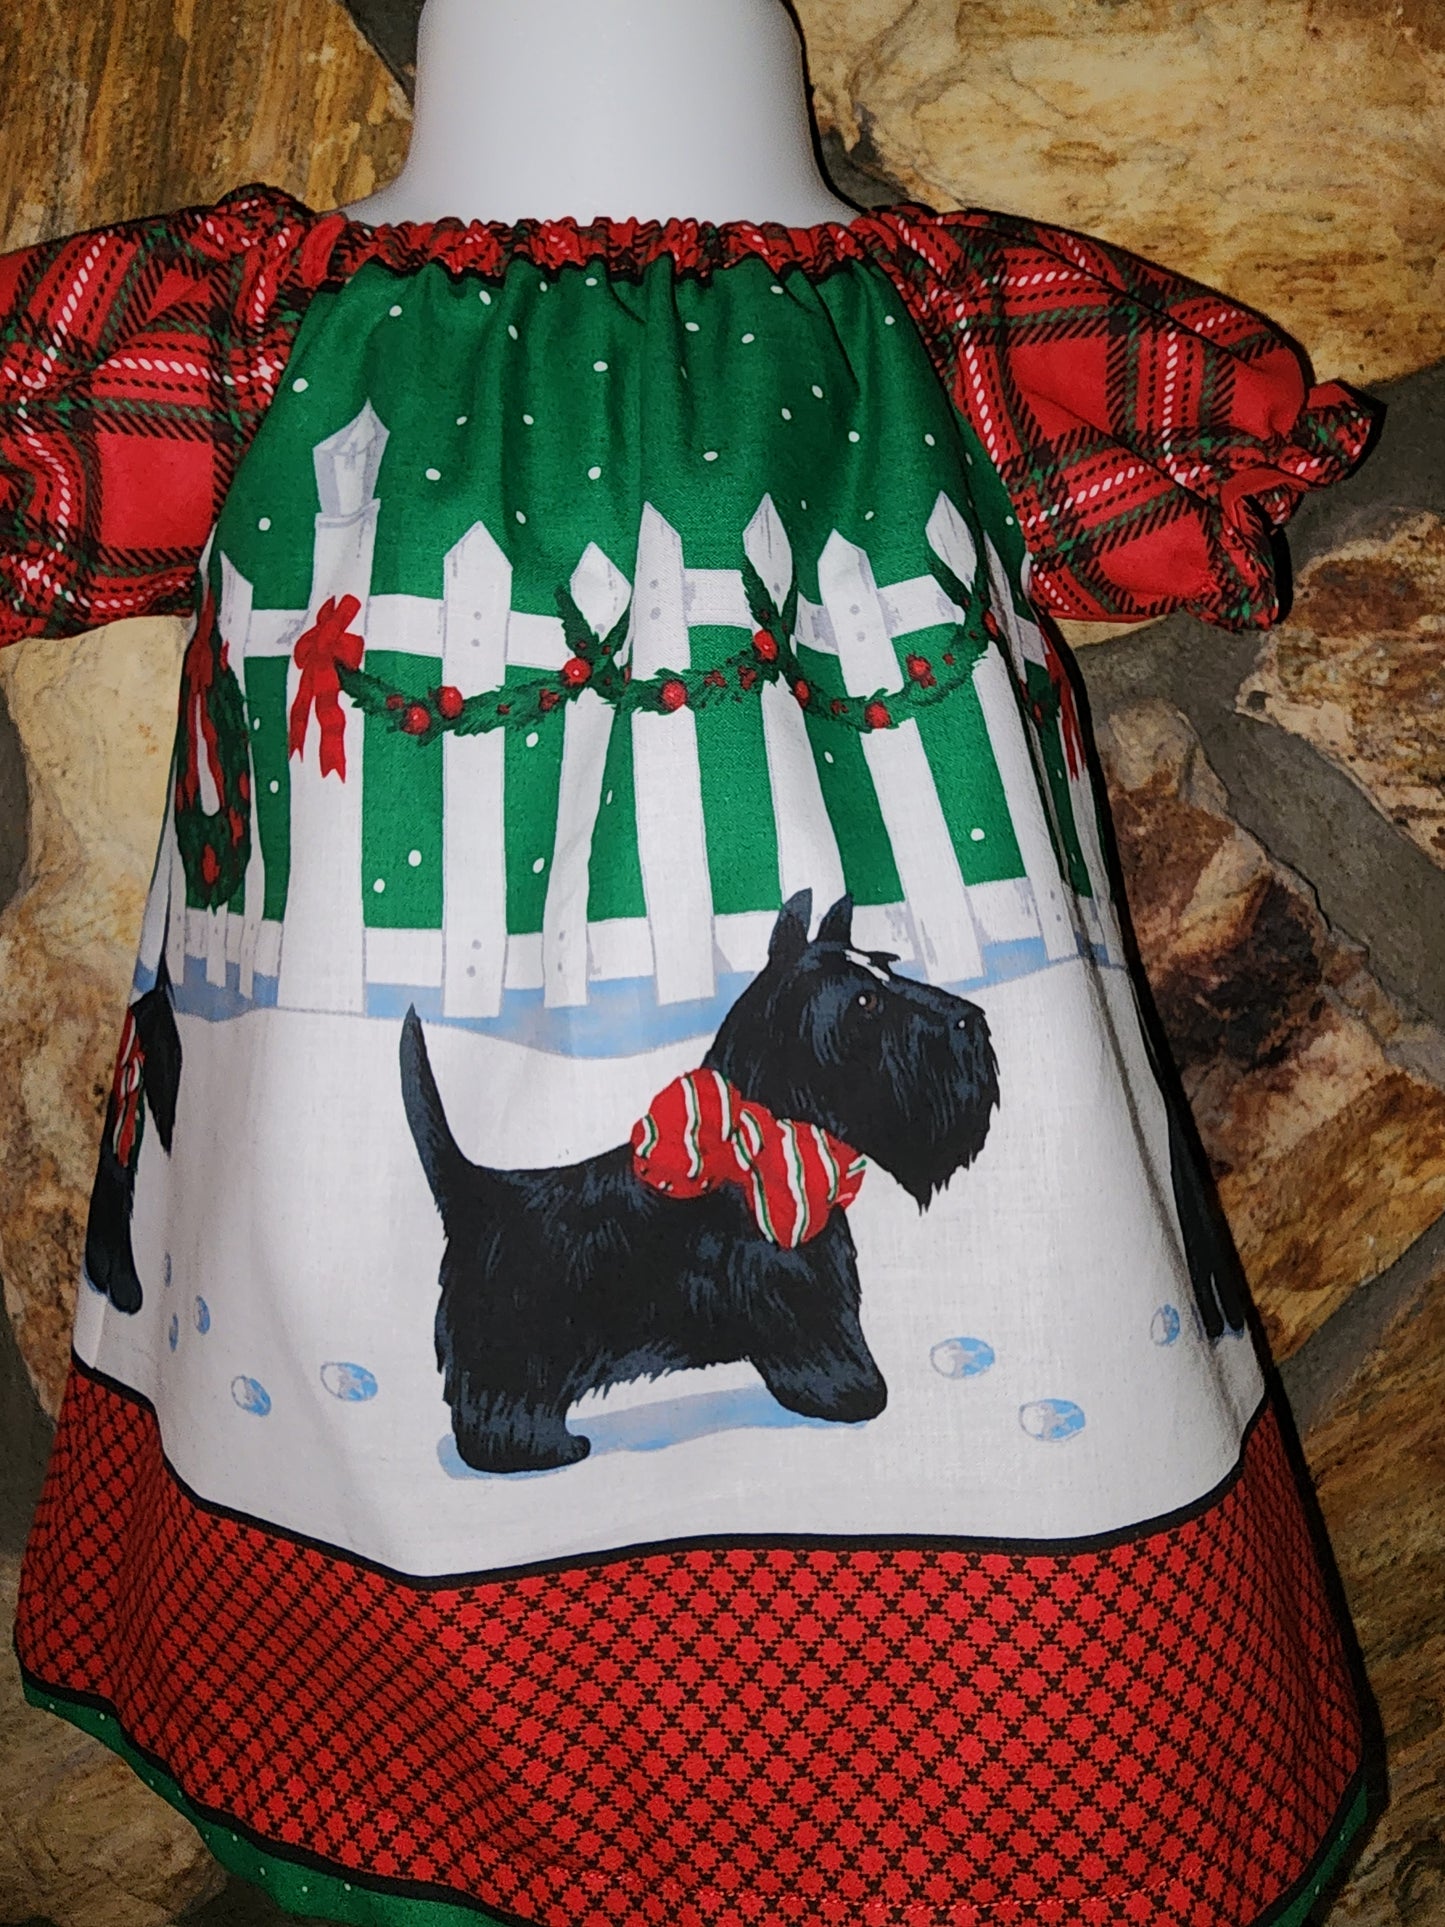 Scottie Dog Christmas Dress